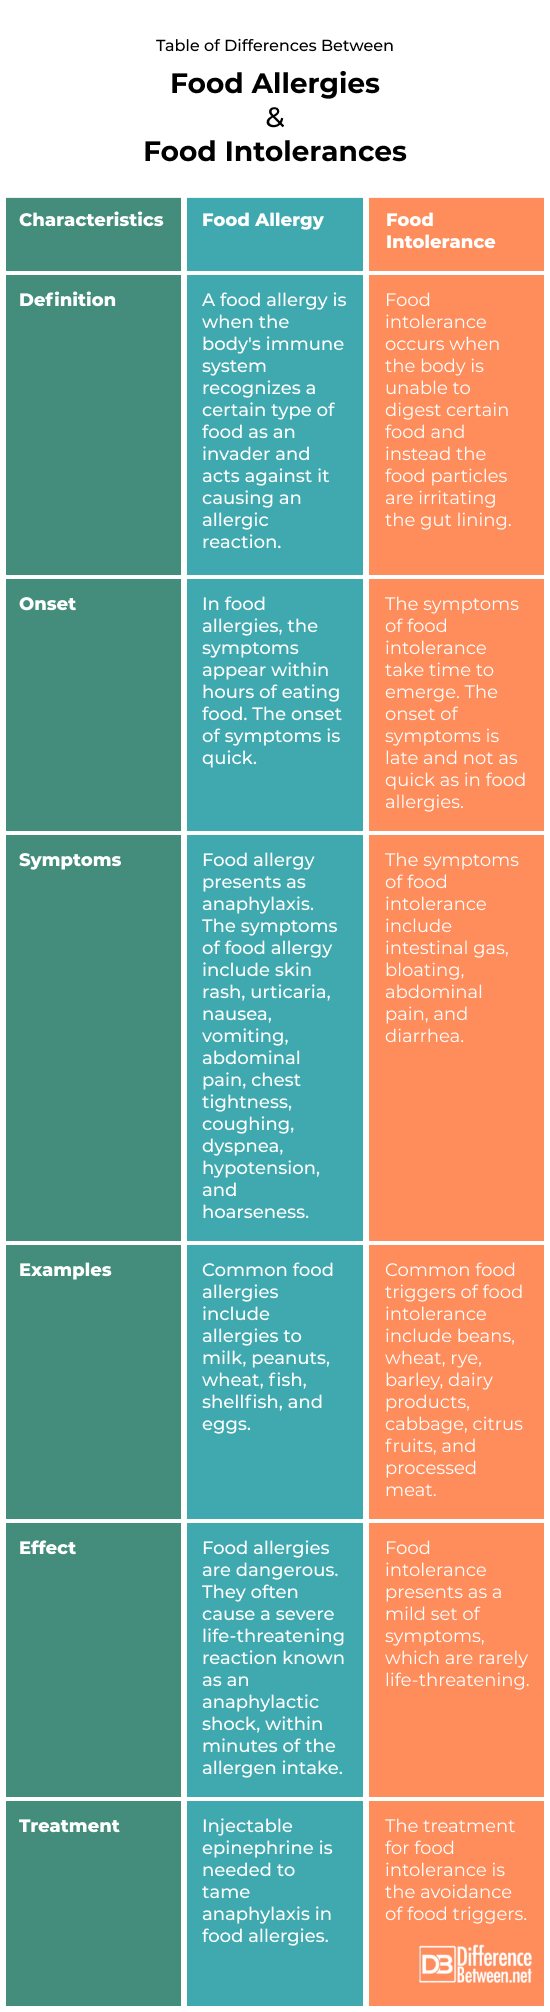 Food allergies and Food intolerances